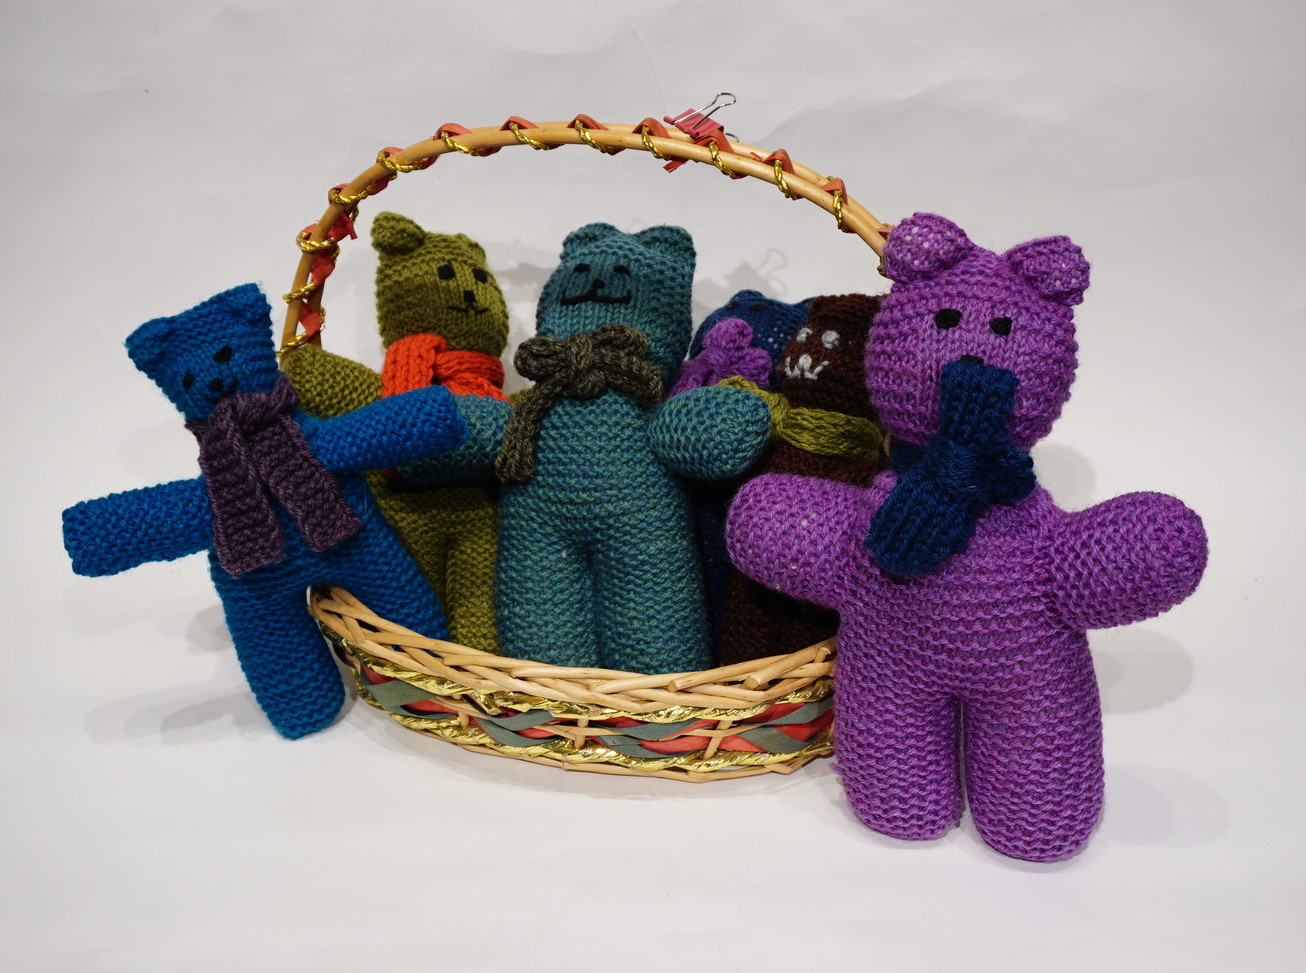 <p>Amdo Knitted Teddy Bears&nbsp;</p>